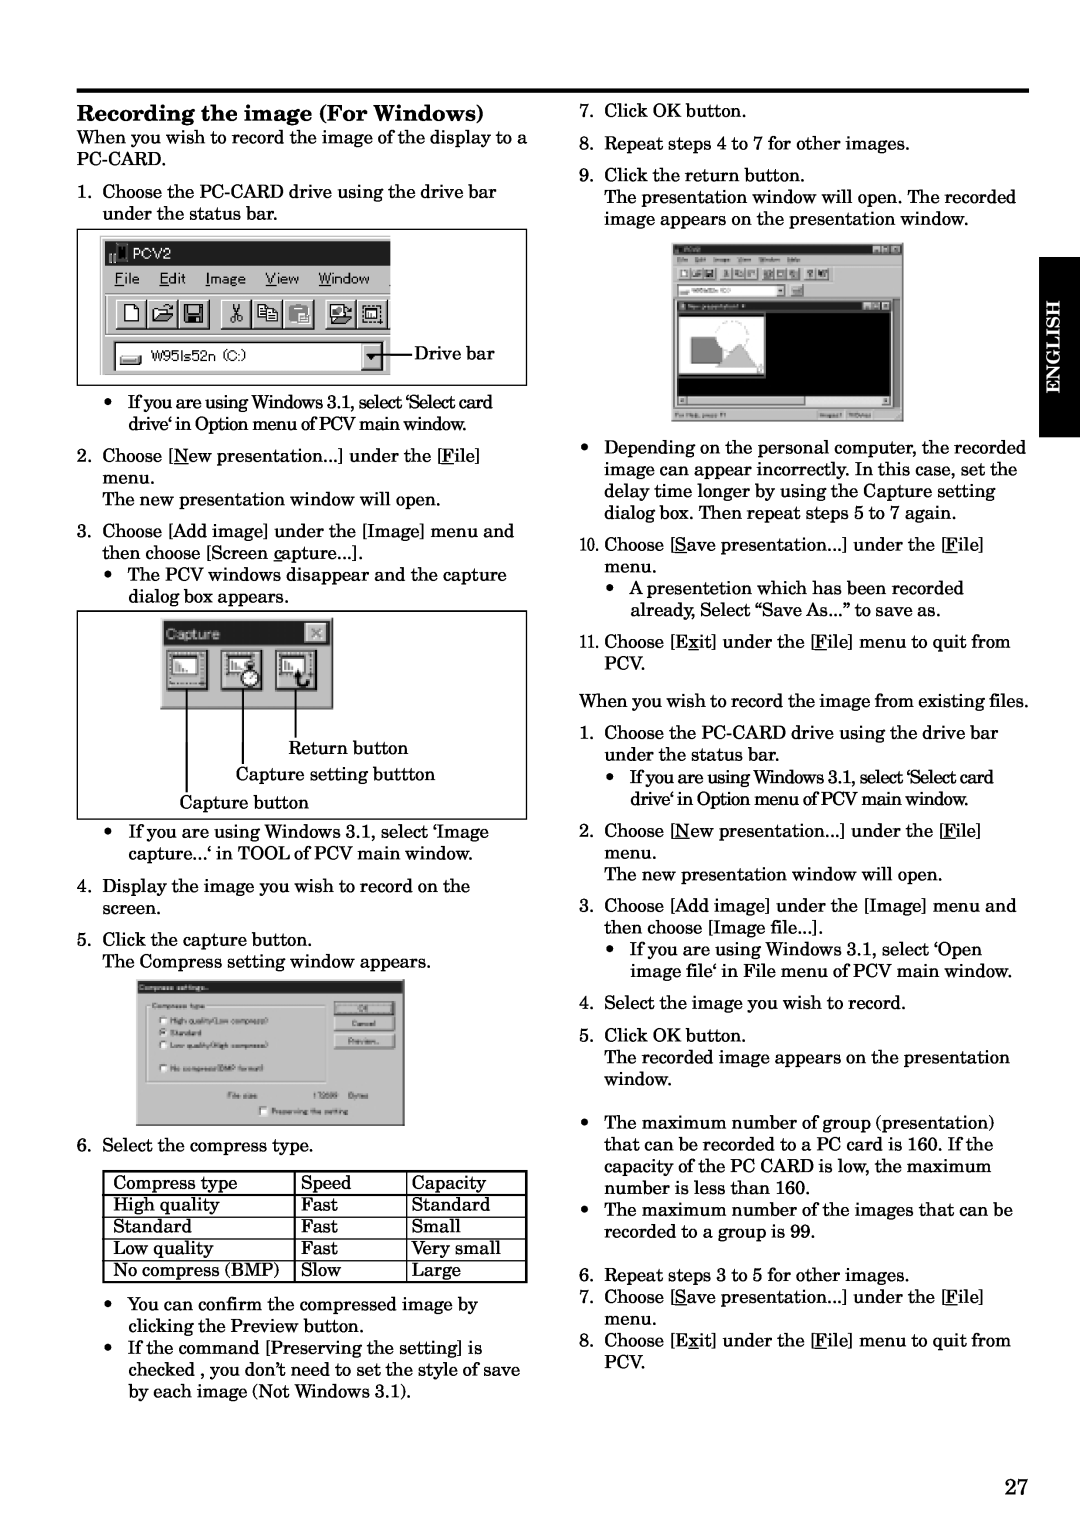 Mitsubishi Electronics LVP-X120A user manual Recording the image For Windows, English 